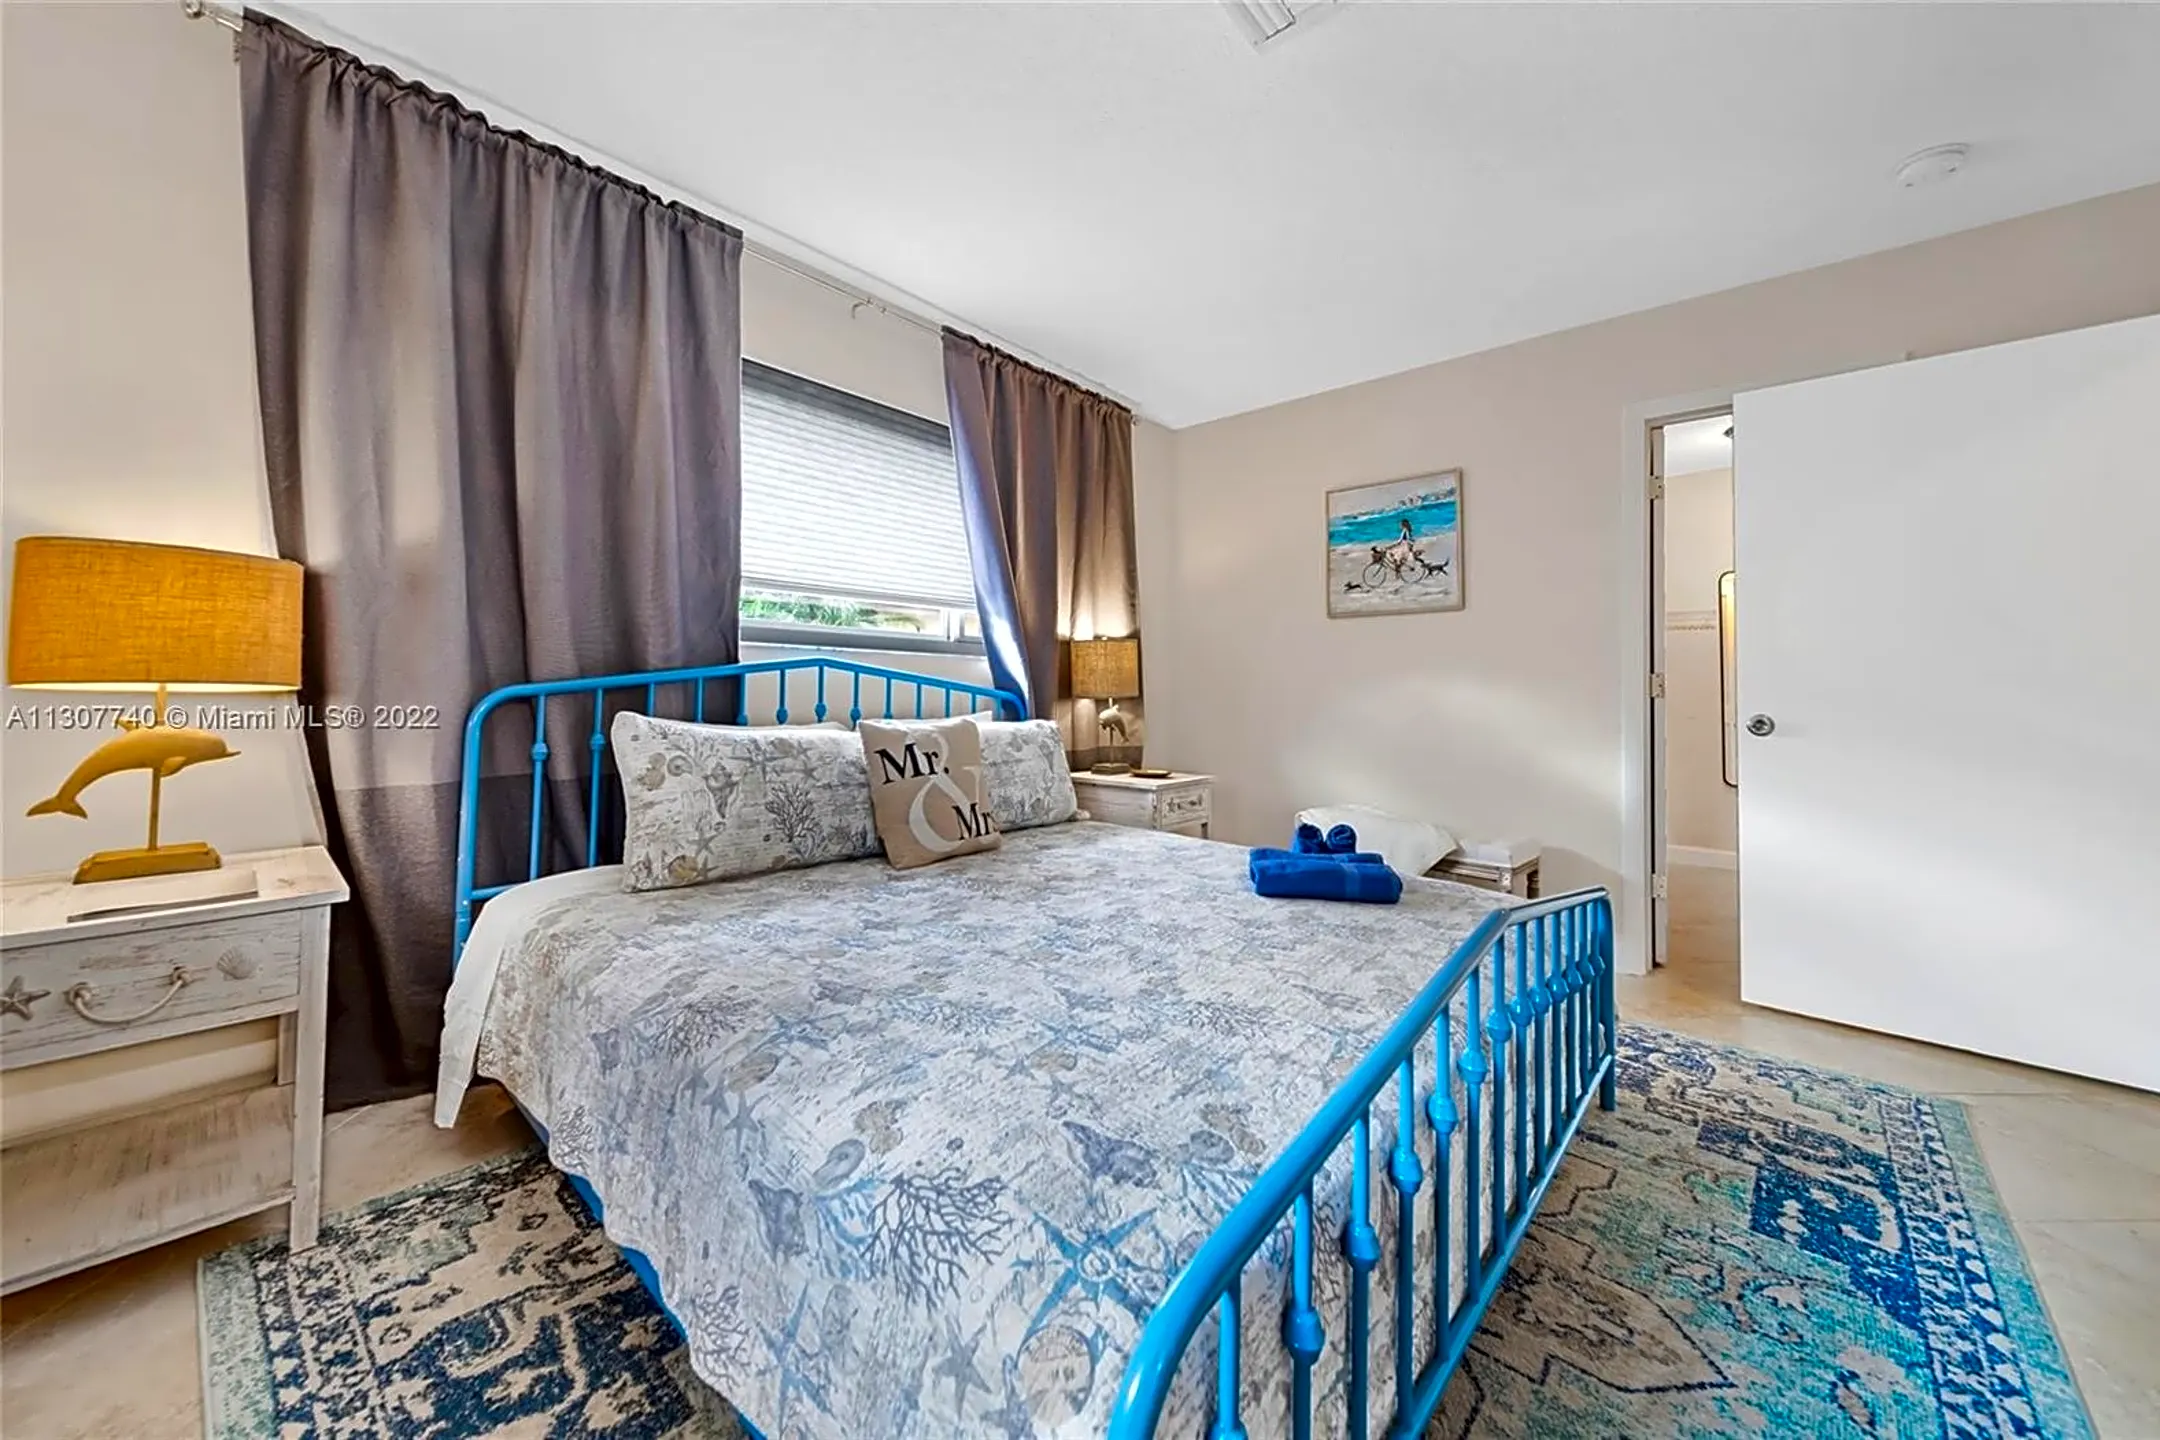 Bedroom - 3320 NE 18th Terrace - Oakland Park, FL